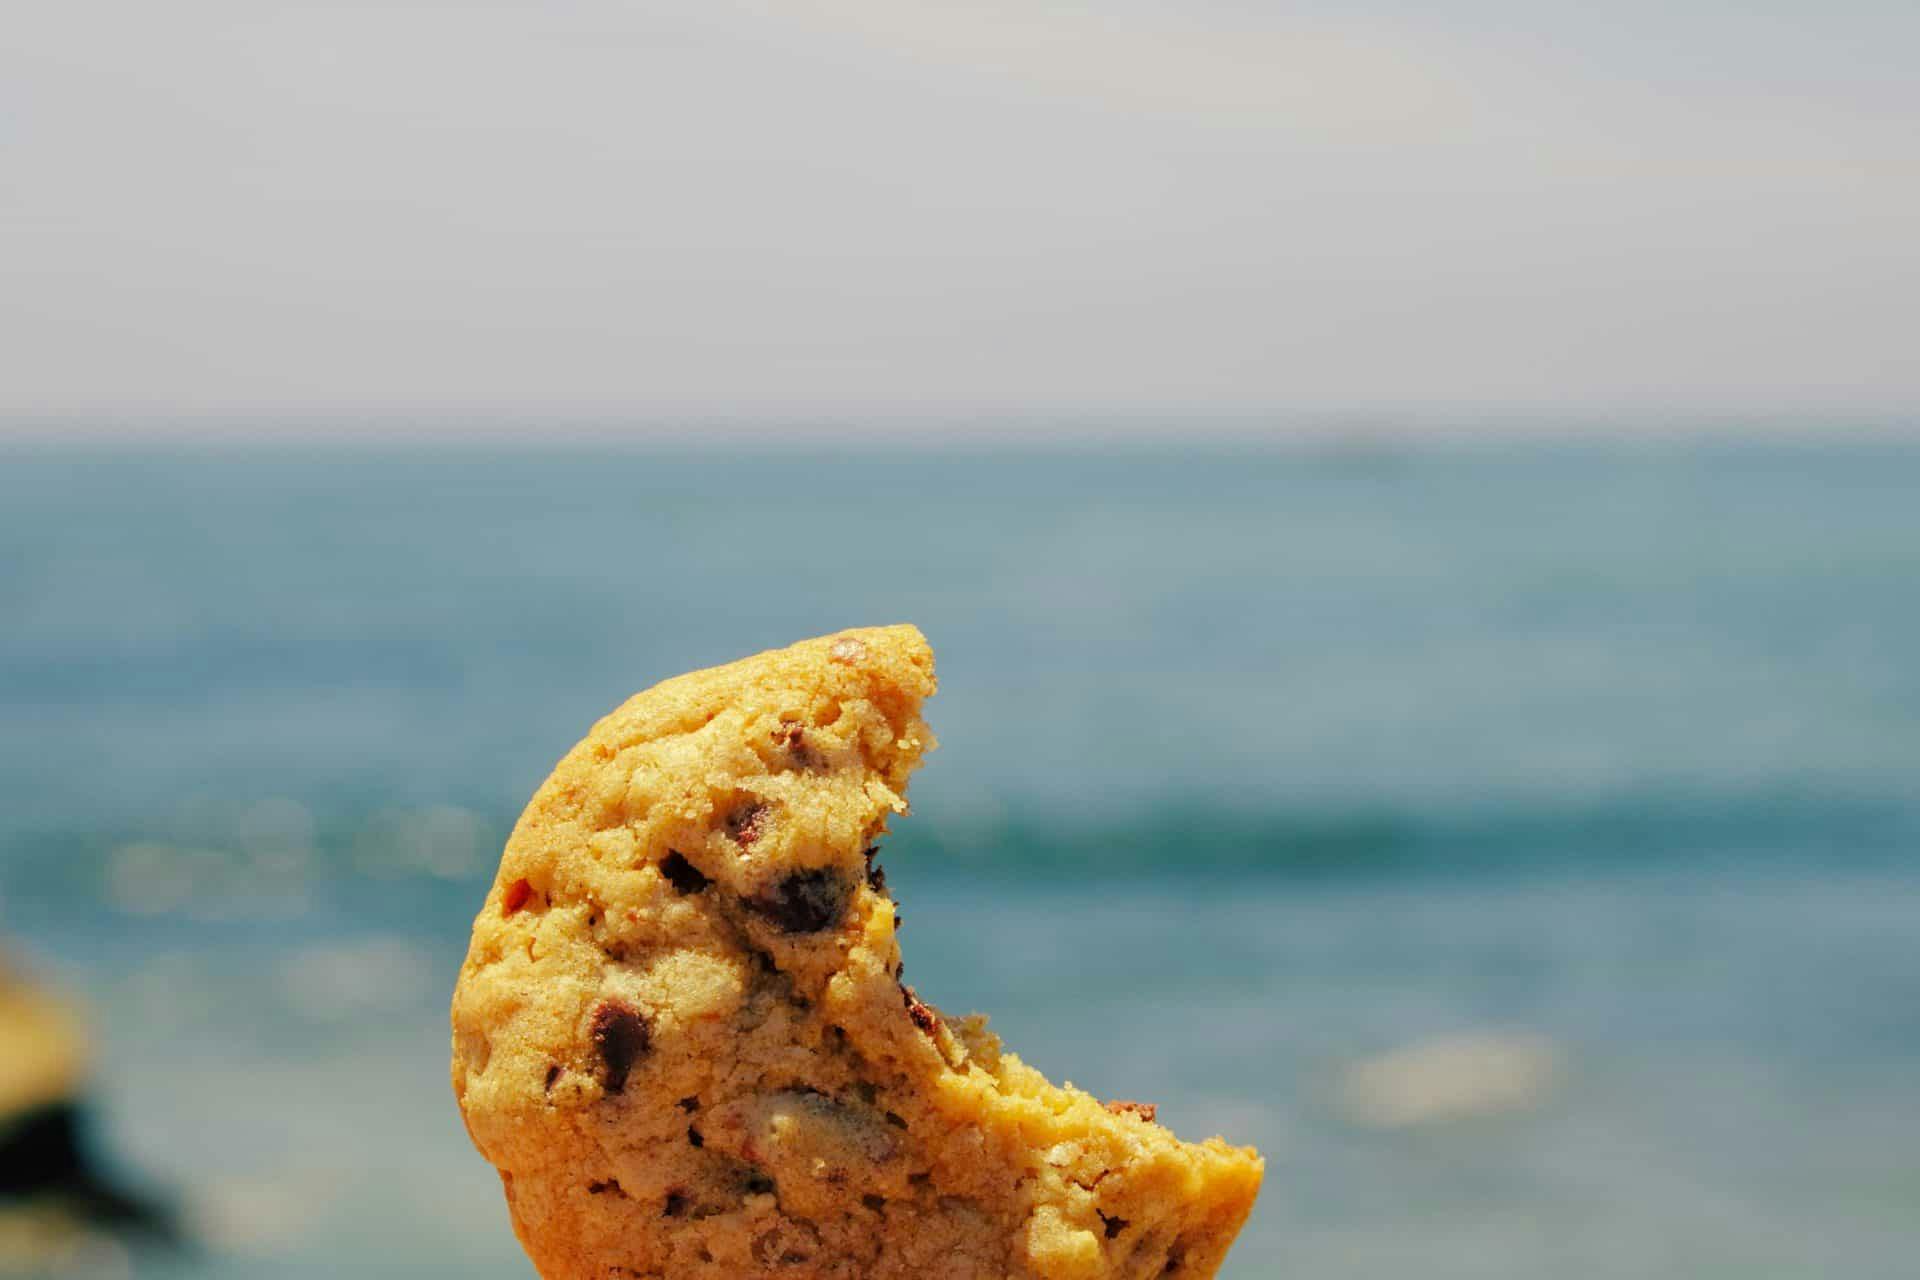 A cookie, missing a bite, by James Lee via Unsplash